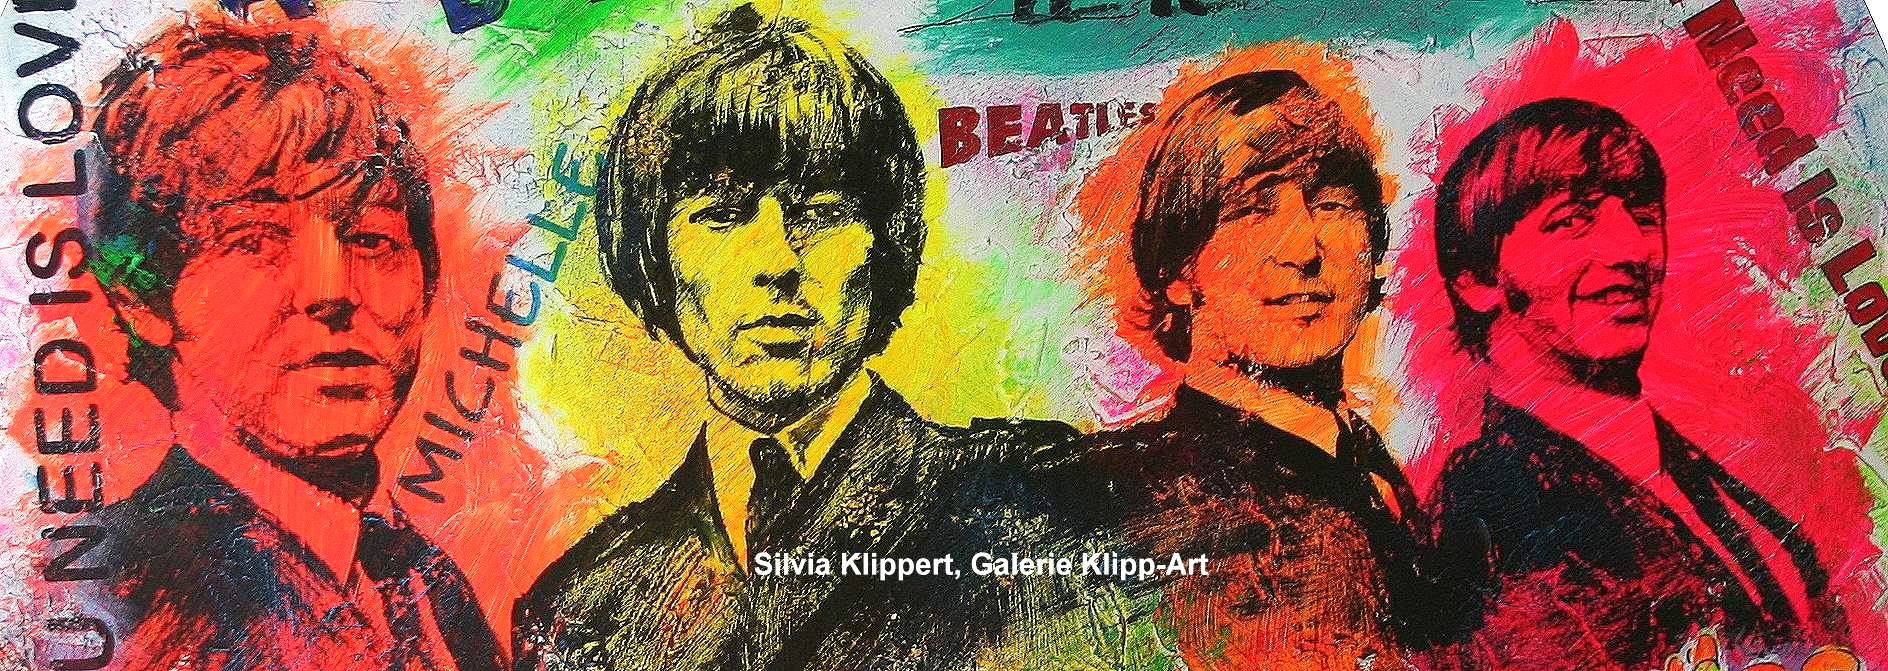 Pop art Stars Beatles painting Bild mit Ringo Starr, Paul McCartney, George Harrison, John Lennon Rolling stones Mick Jagger Galerie